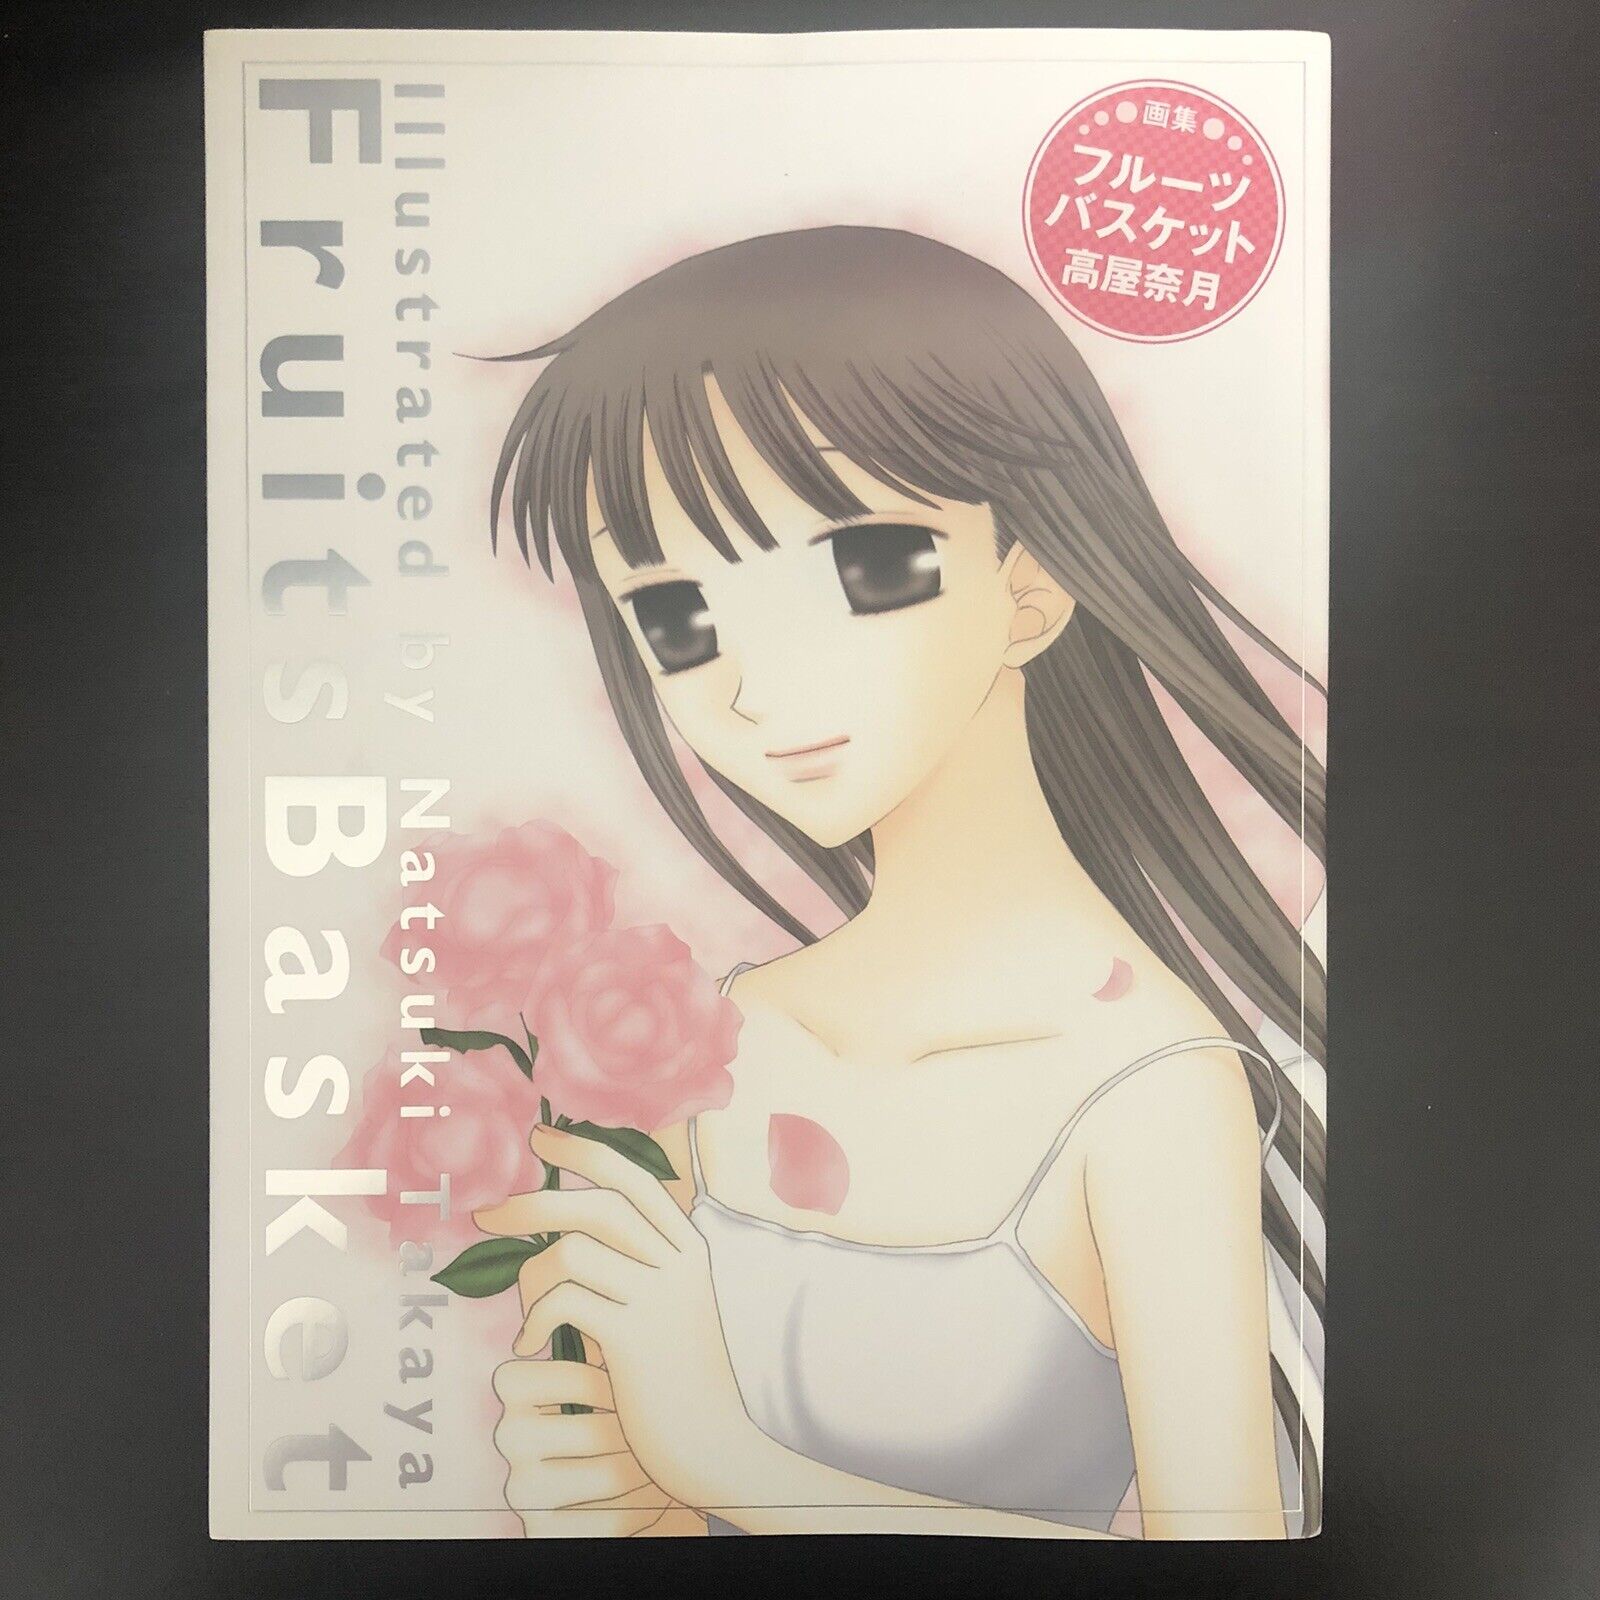 Fruits Basket Natsuki Takaya Art Book 1st Season Illustrated Anime Manga